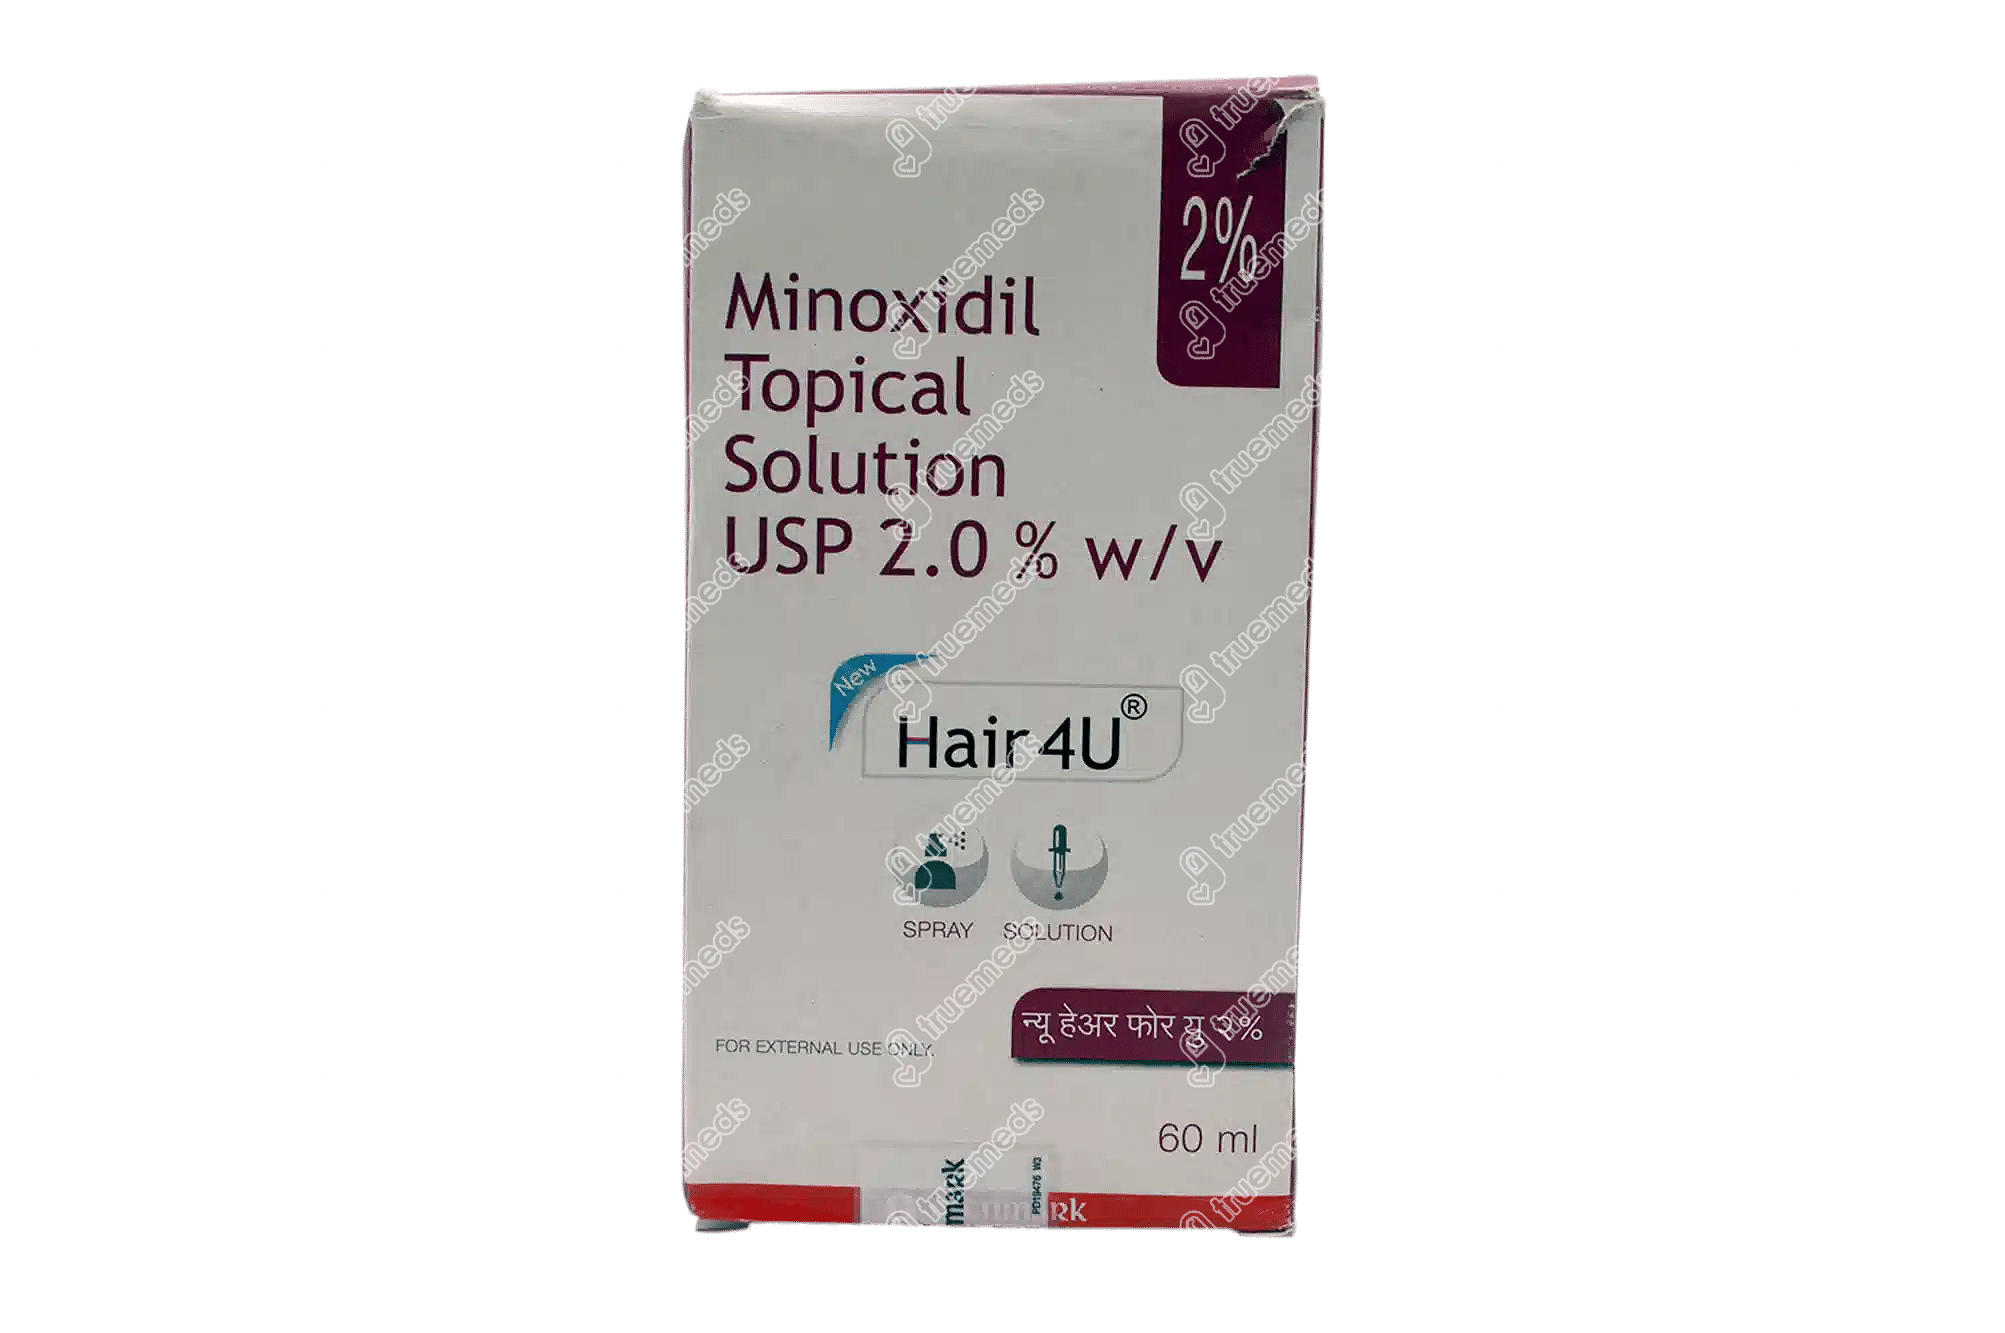 Hair 4u 2 Solution Spray Hair bottle